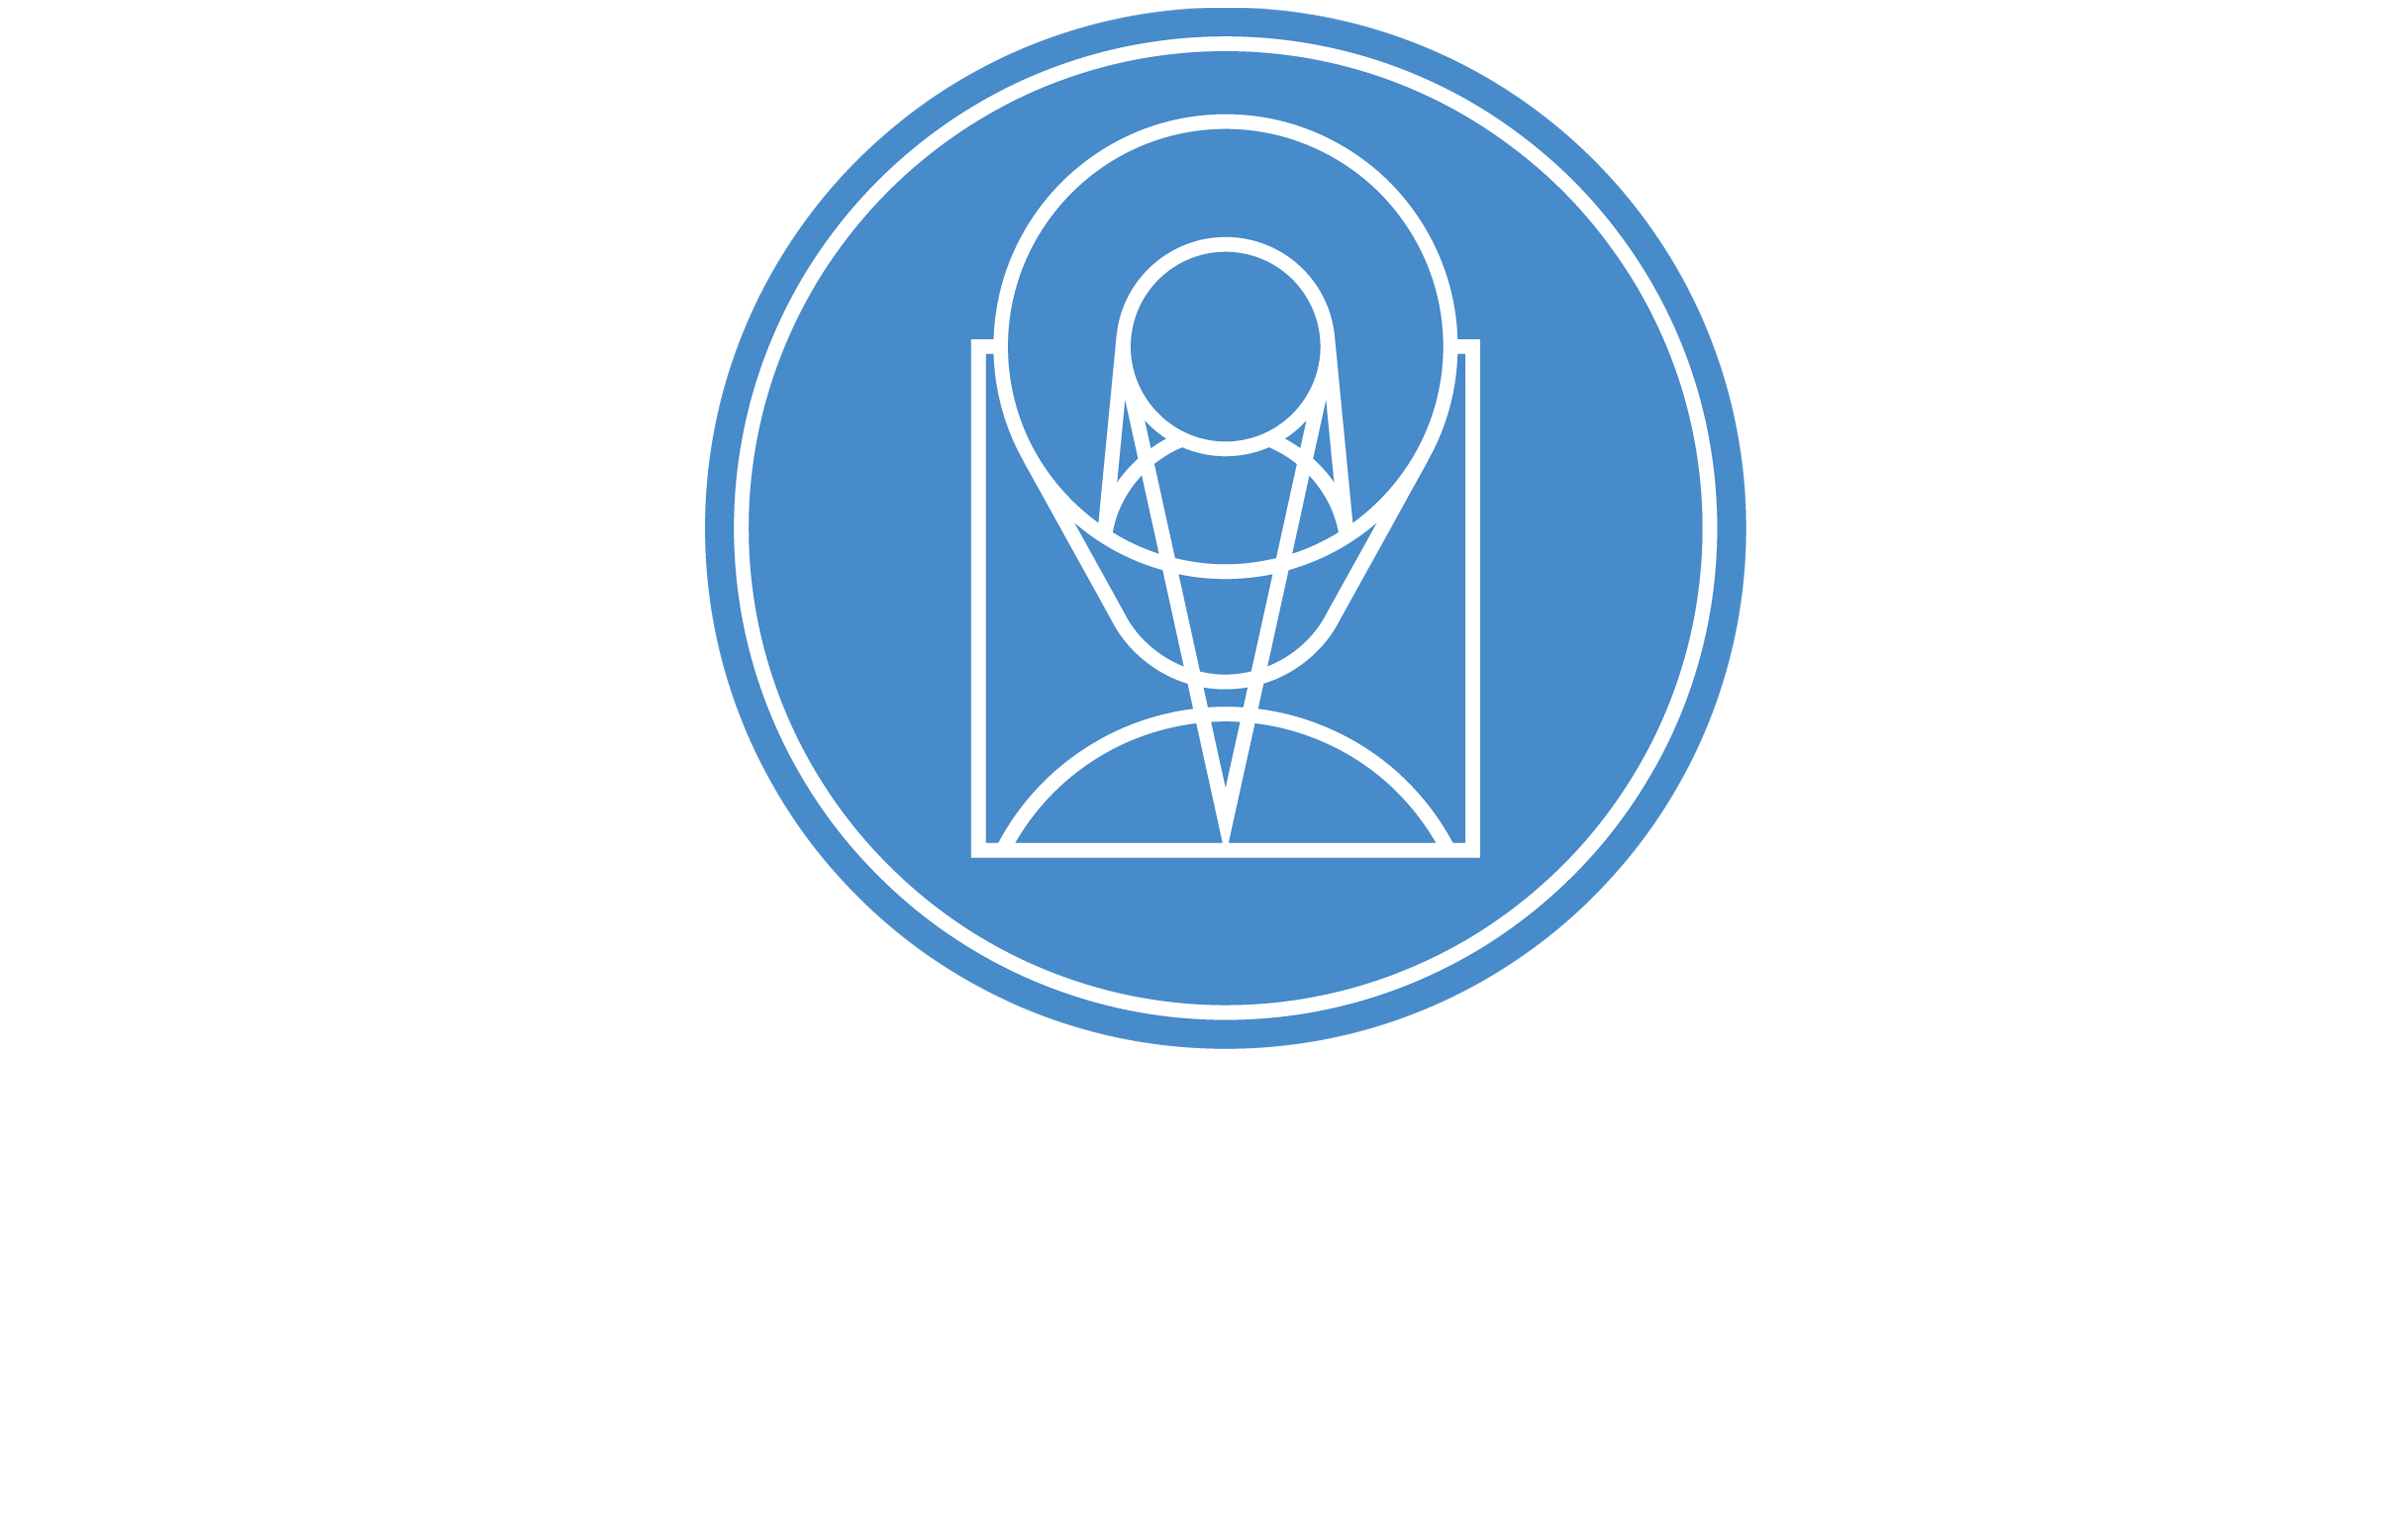 The Space Telescope Science Institute funding acknowledgement